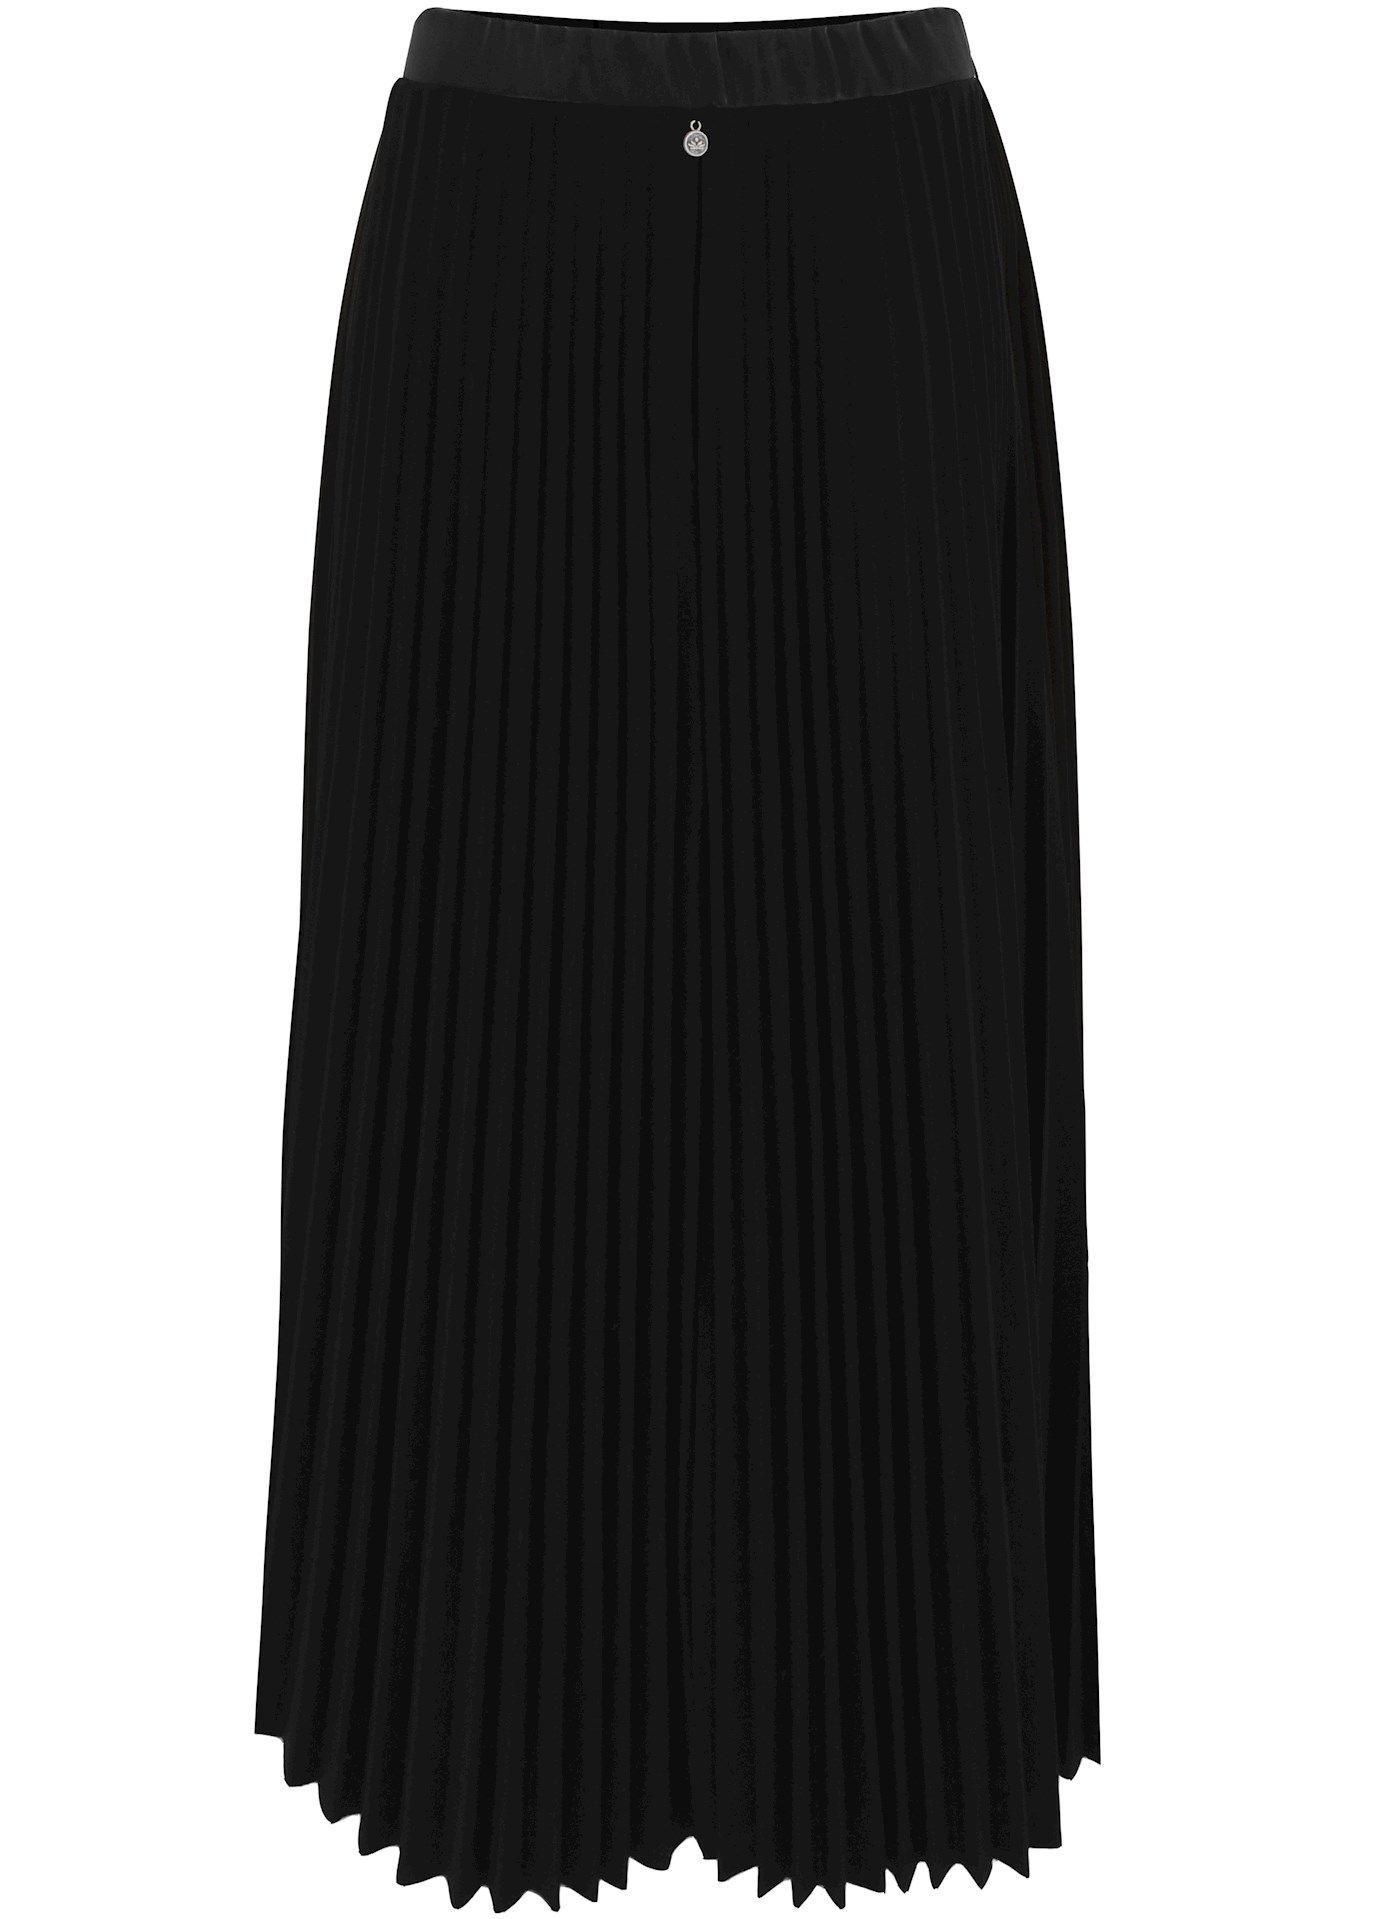 Redenaar dood langzaam Tramontana wikkel plissé rok zwart Q15-97-201